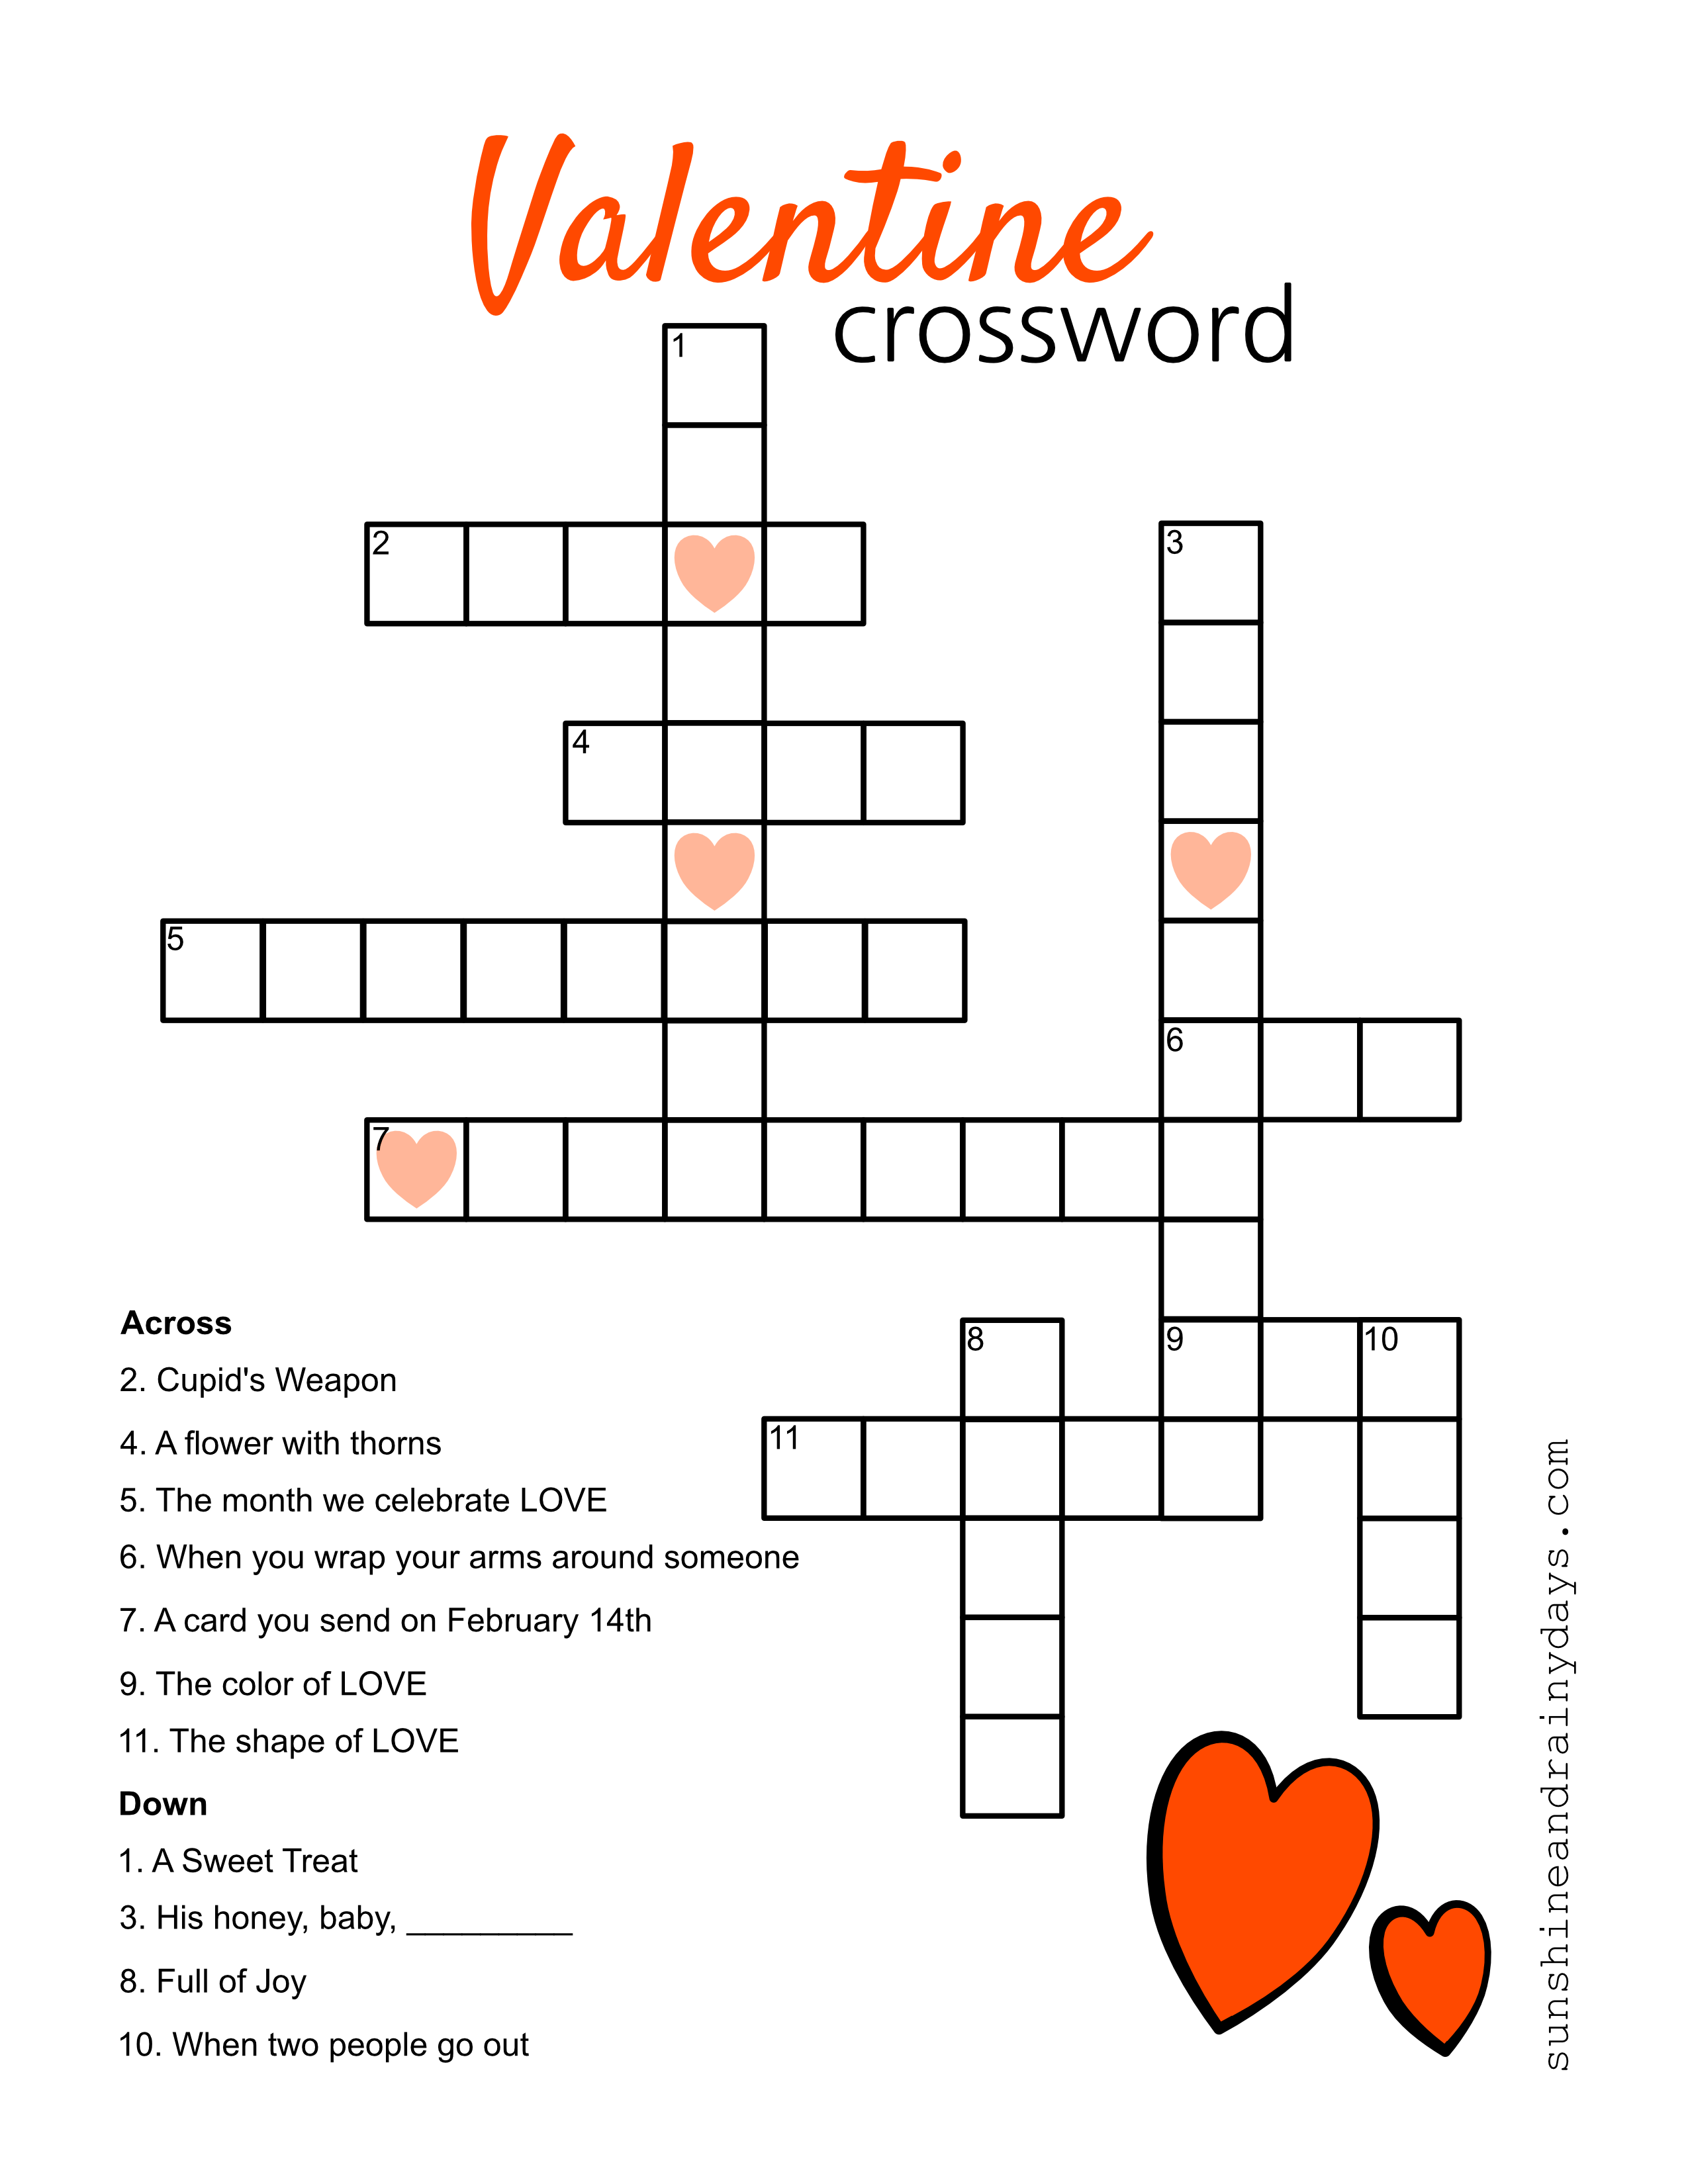 Valentine Crossword Puzzle - Sunshine and Rainy Days